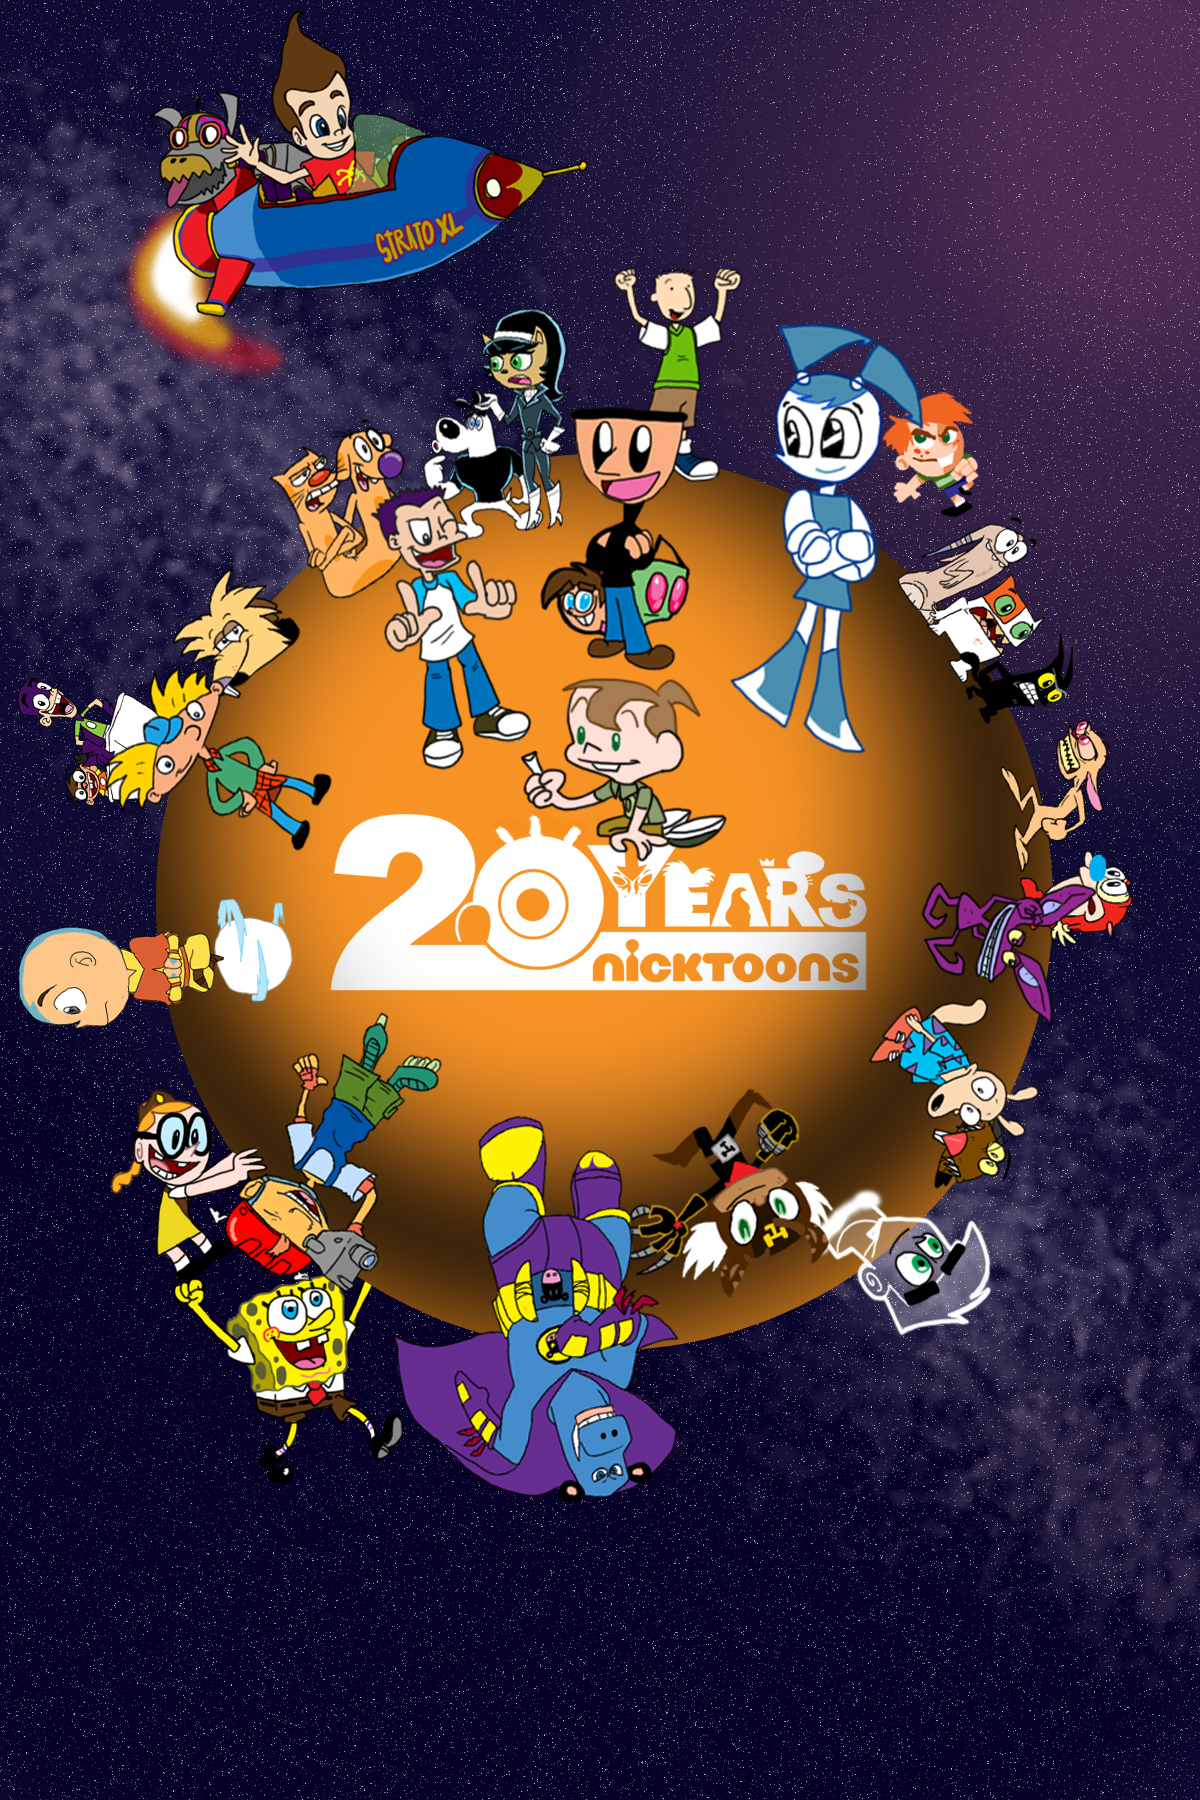 Nicktoons 20th Anniversary by nicktoonhero